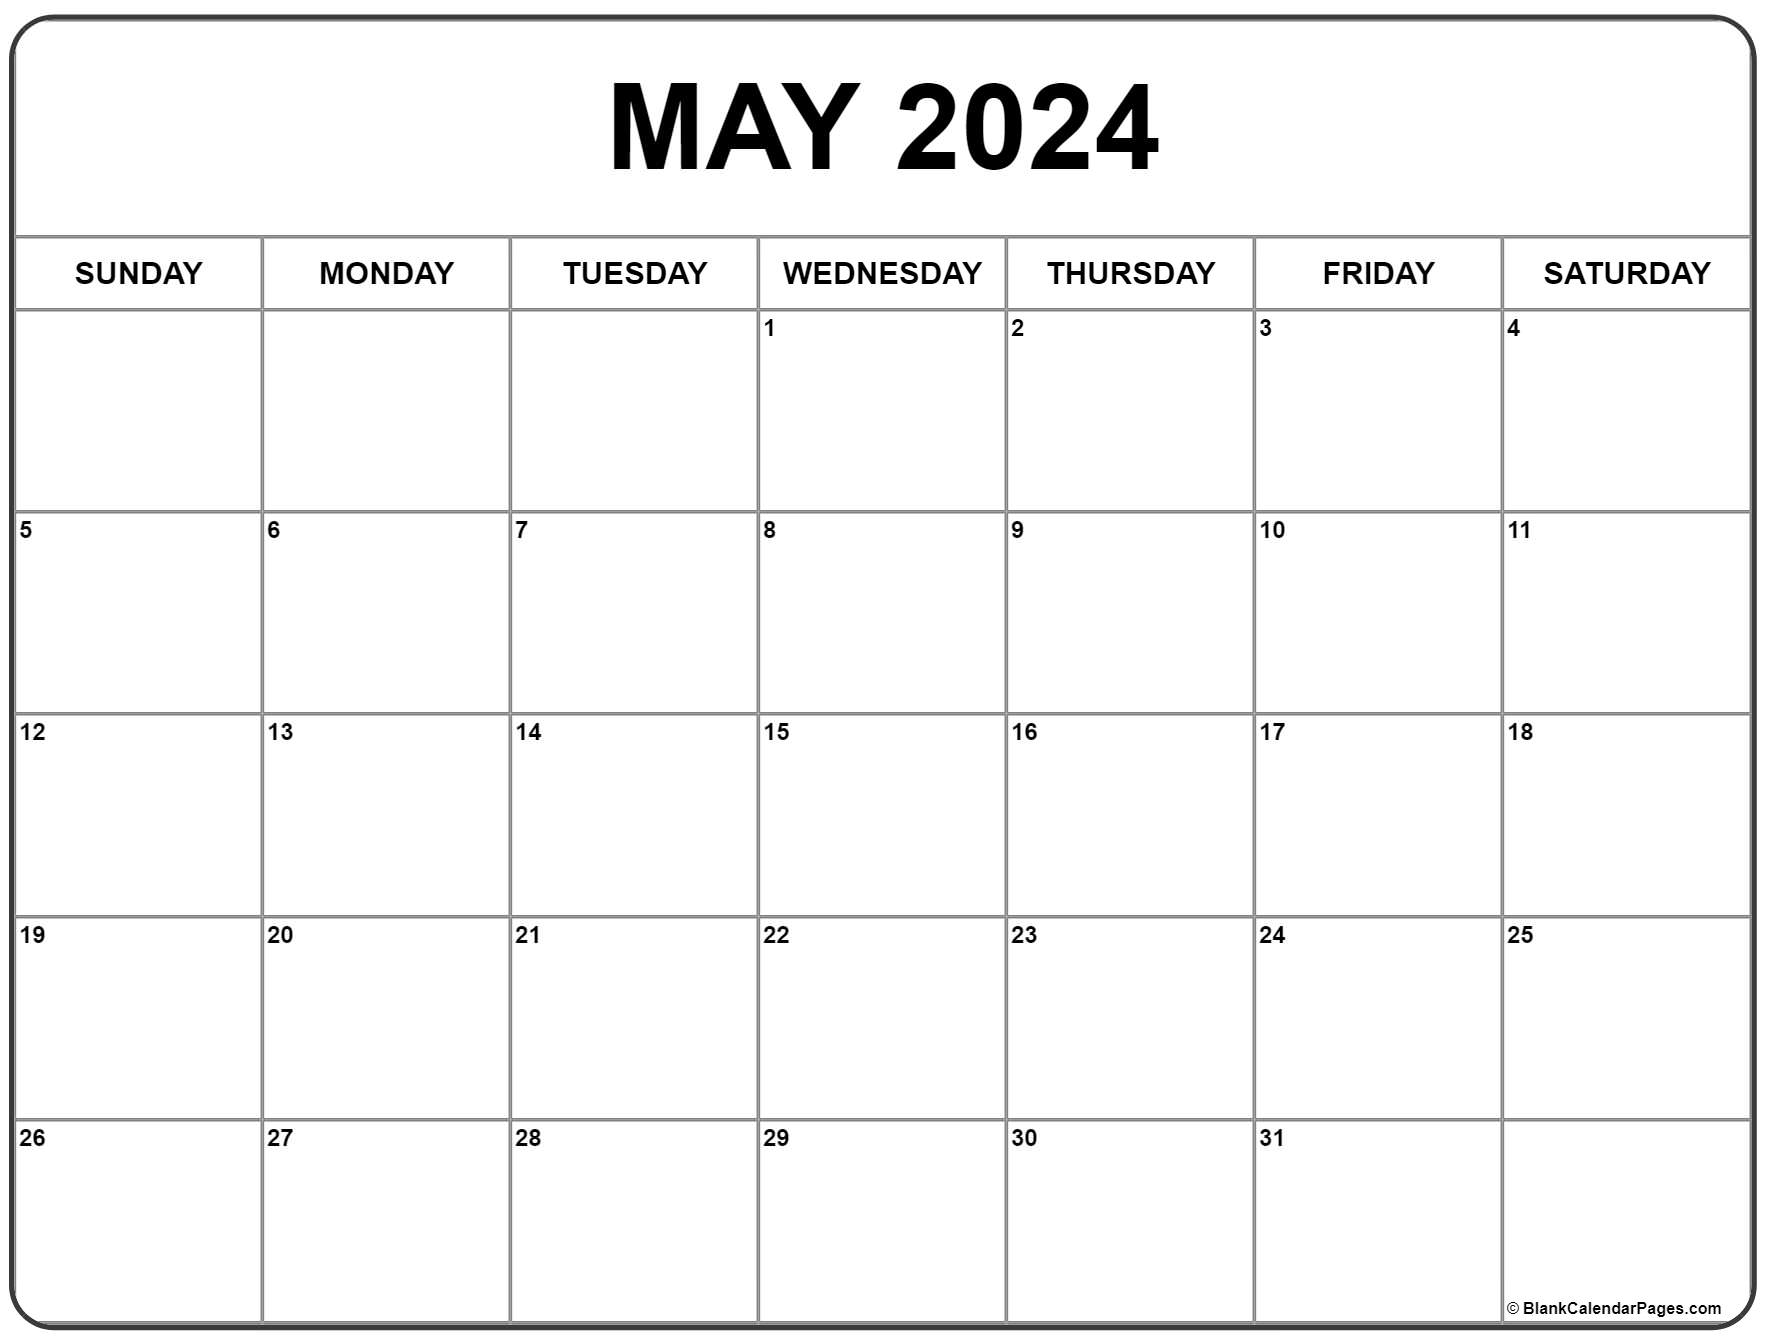 May 2024 Calendar | Free Printable Calendar for Printable Calendar 2024 May